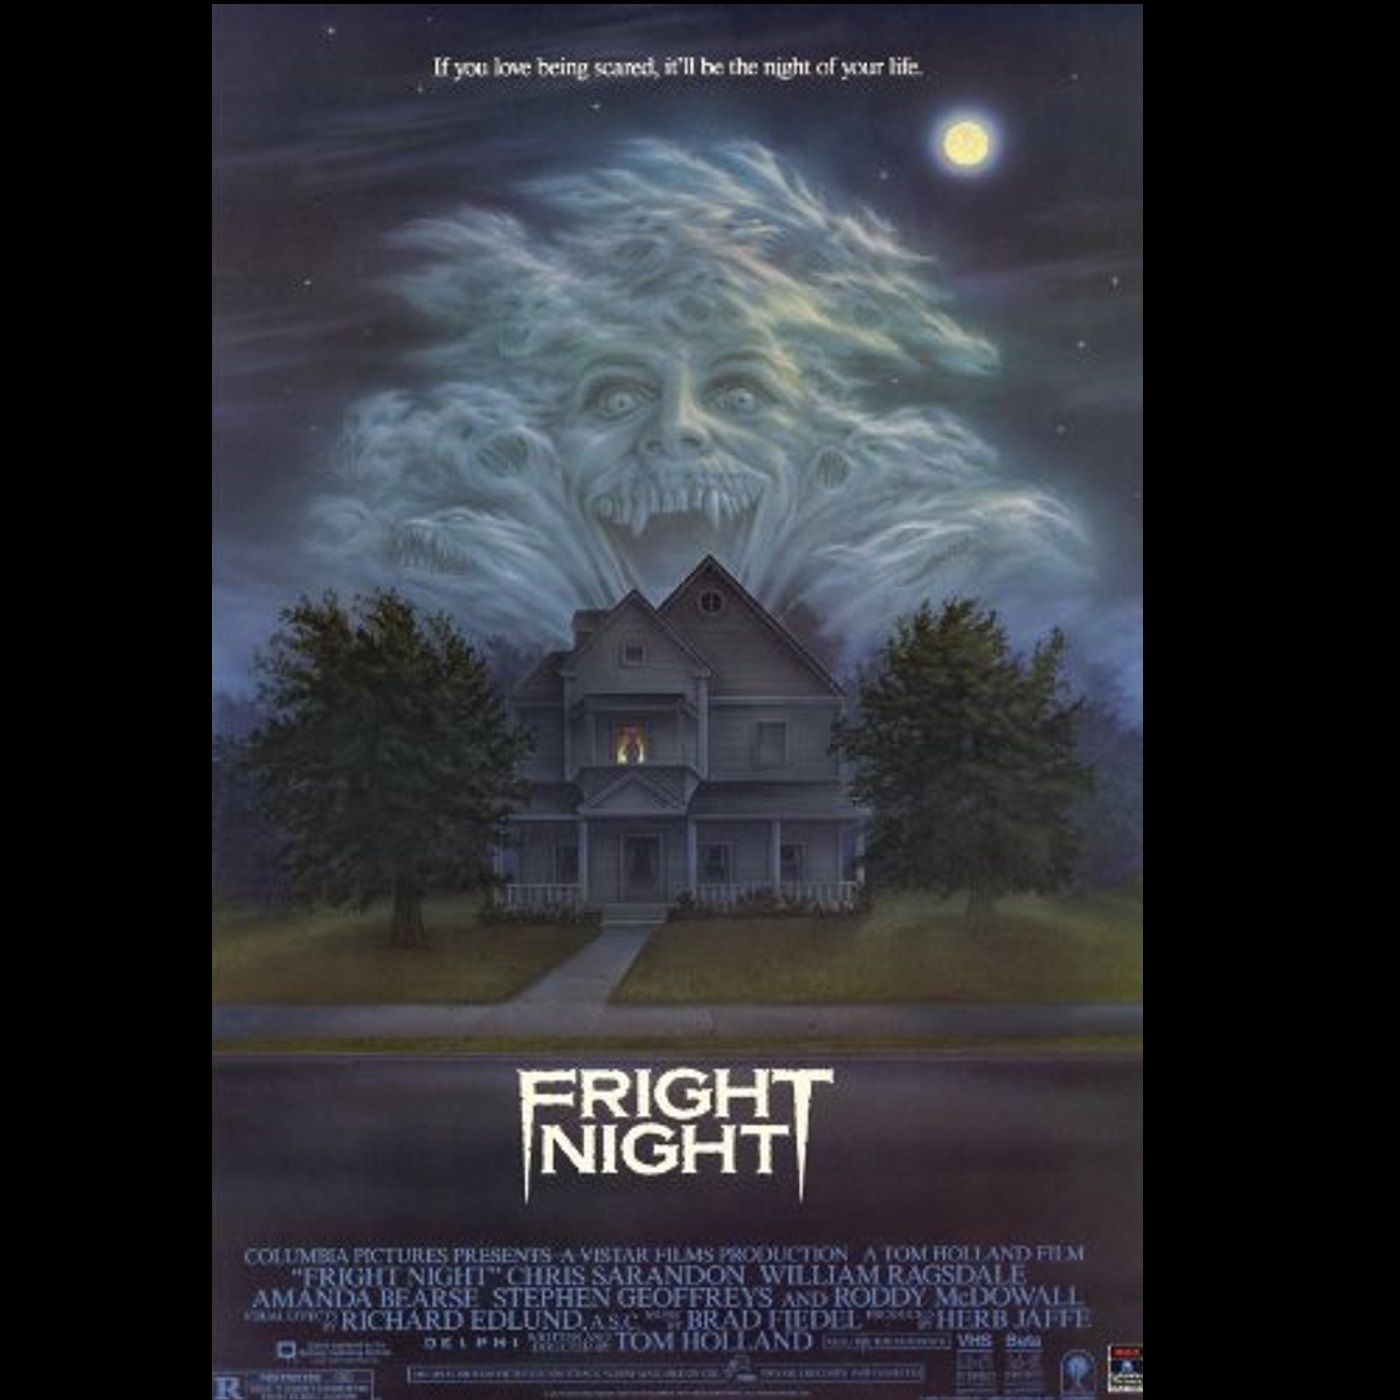 66 Fright Night